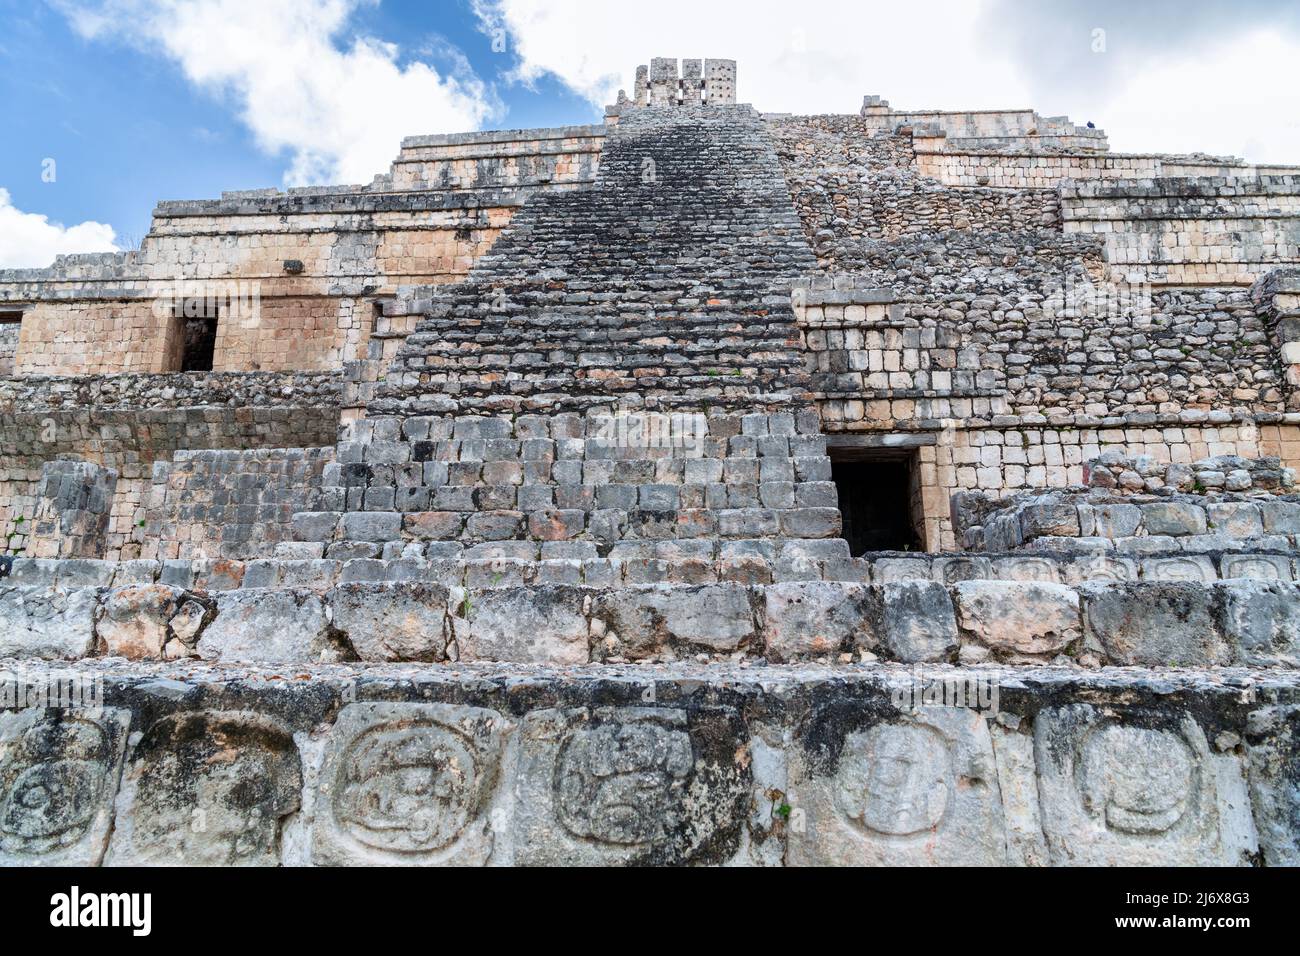 Eine zentrale Treppe, Details der Edzna-Pyramide, alte maya-Ruinen, Campeche, Yukatan, Mexiko Stockfoto